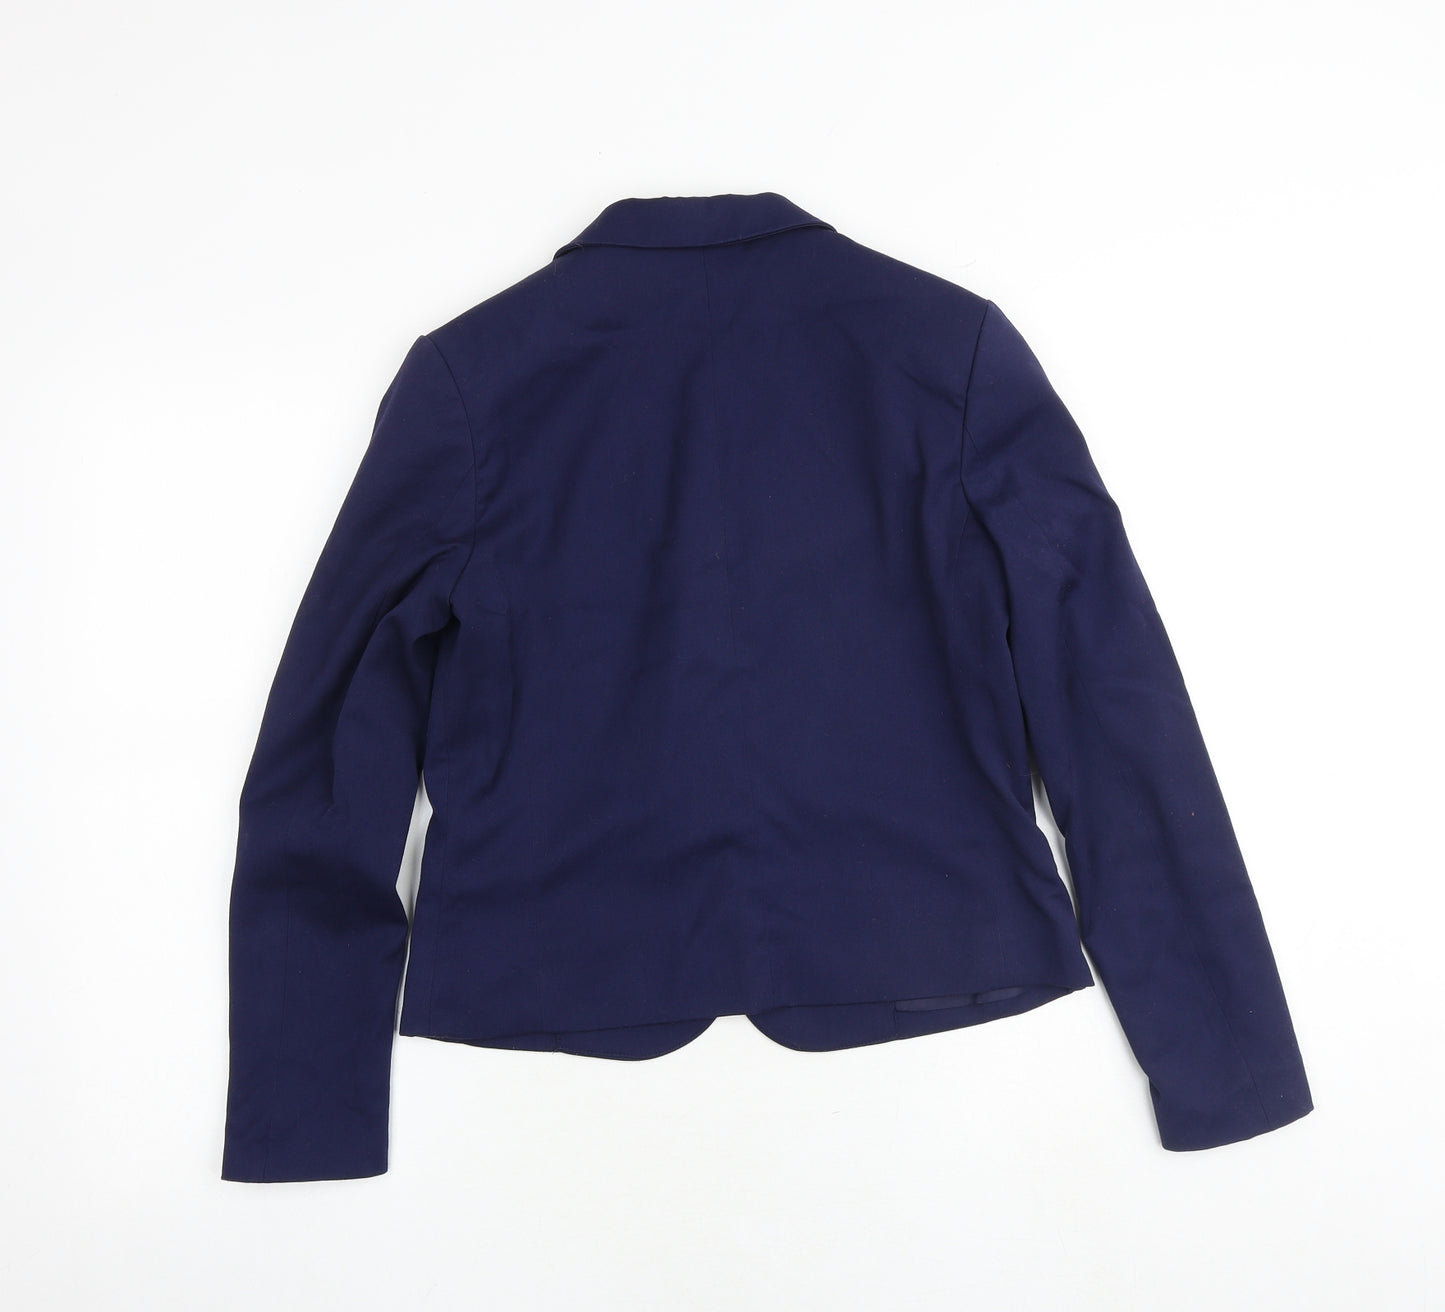 H&M Womens Blue Jacket Blazer Size 10